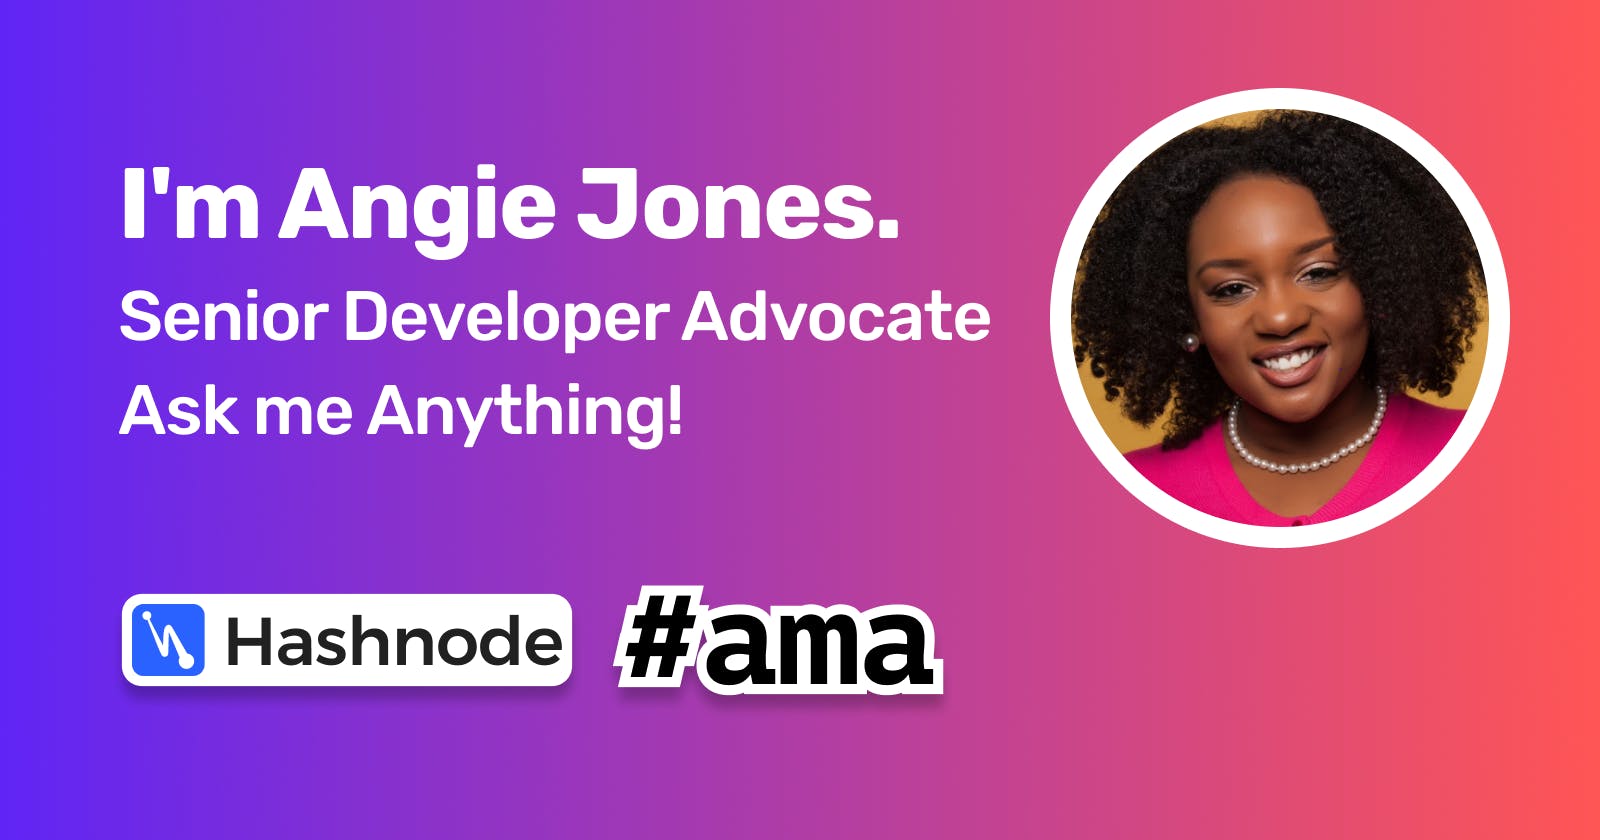 I'm Angie Jones. Senior Developer Advocate. Ask me Anything! 👋